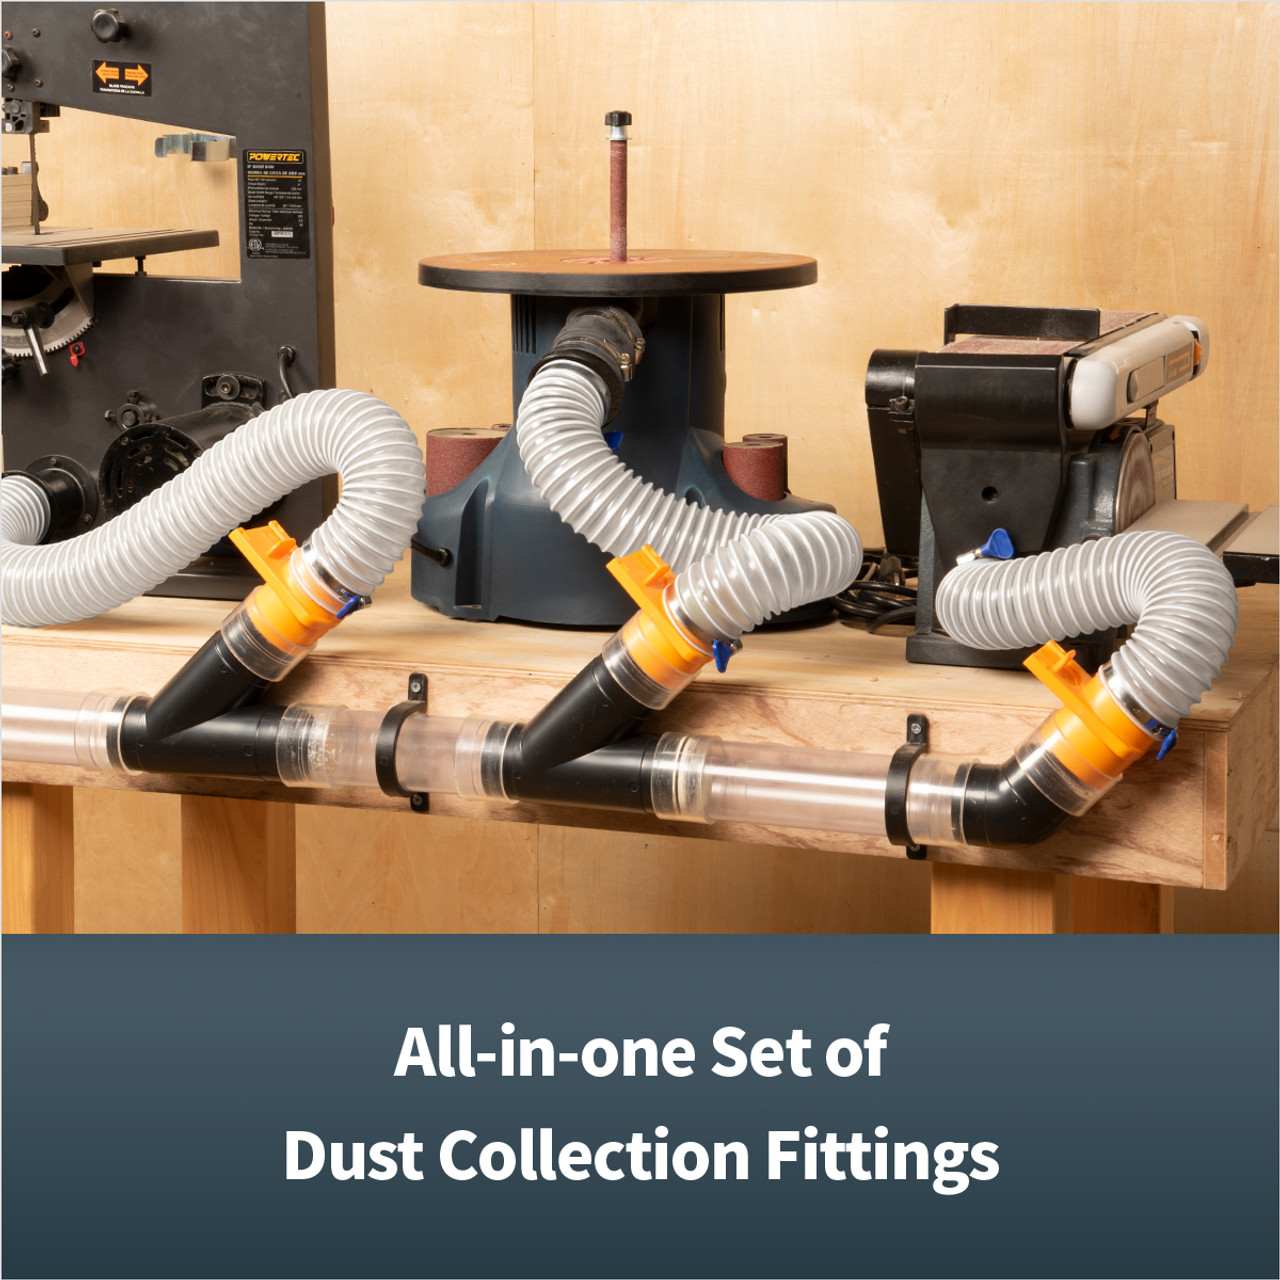 New Powertec 4In Three-Machine Dust Collection Kit Streamlined Woodwork Workshop 